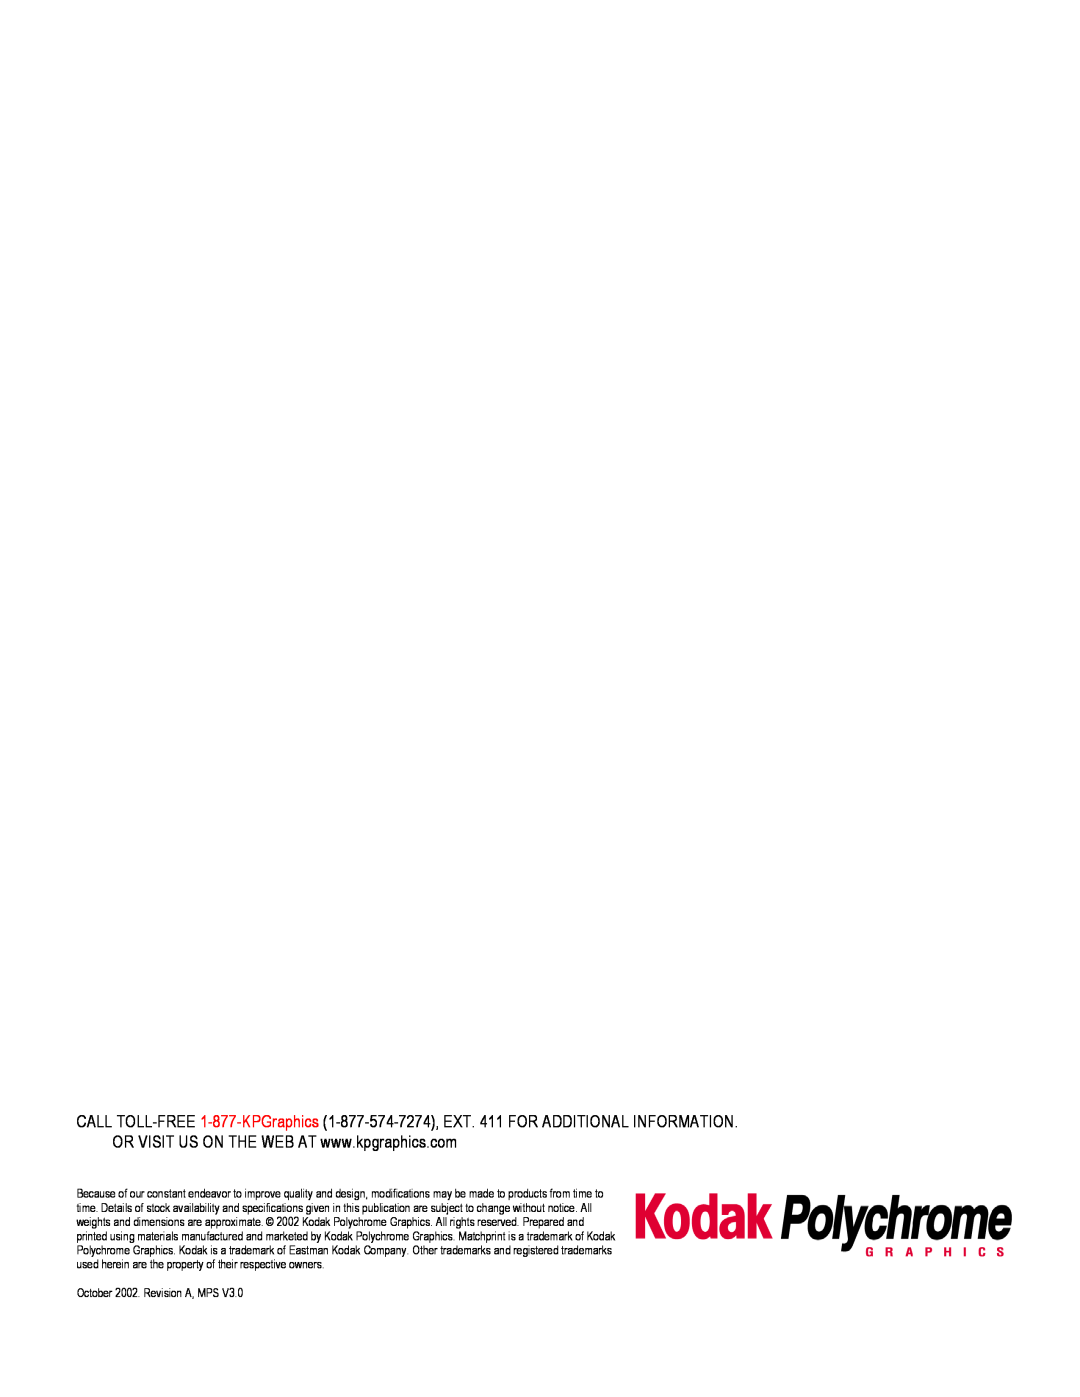 Kodak KY0730485 quick start October 2002. Revision A, MPS 